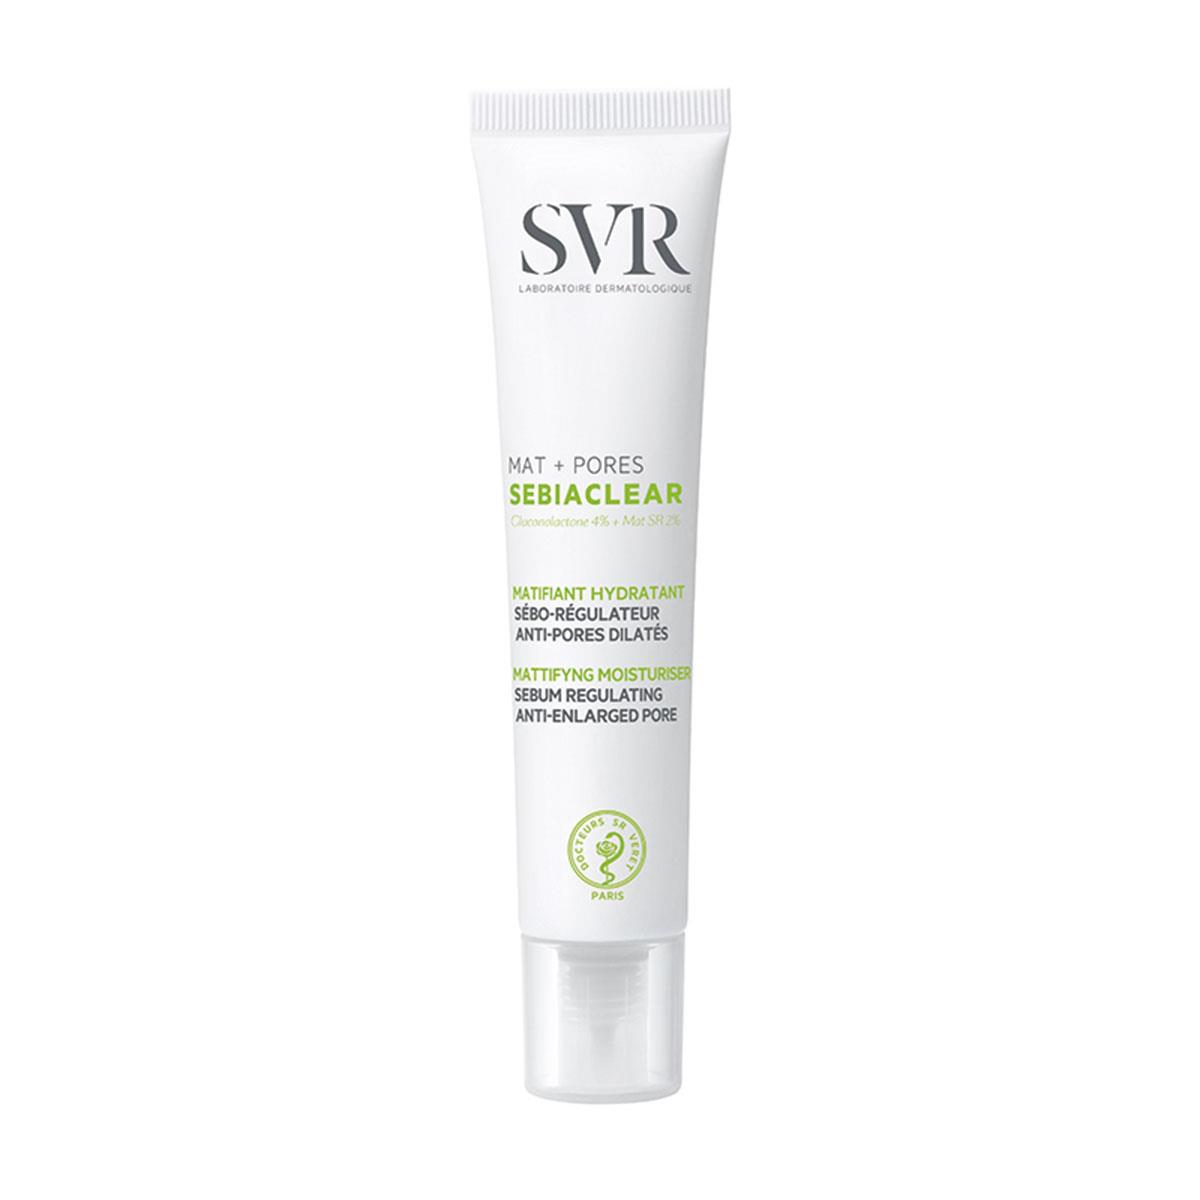 SVR Sebiaclear Mat+Pores Cream 40 ml - Daffne